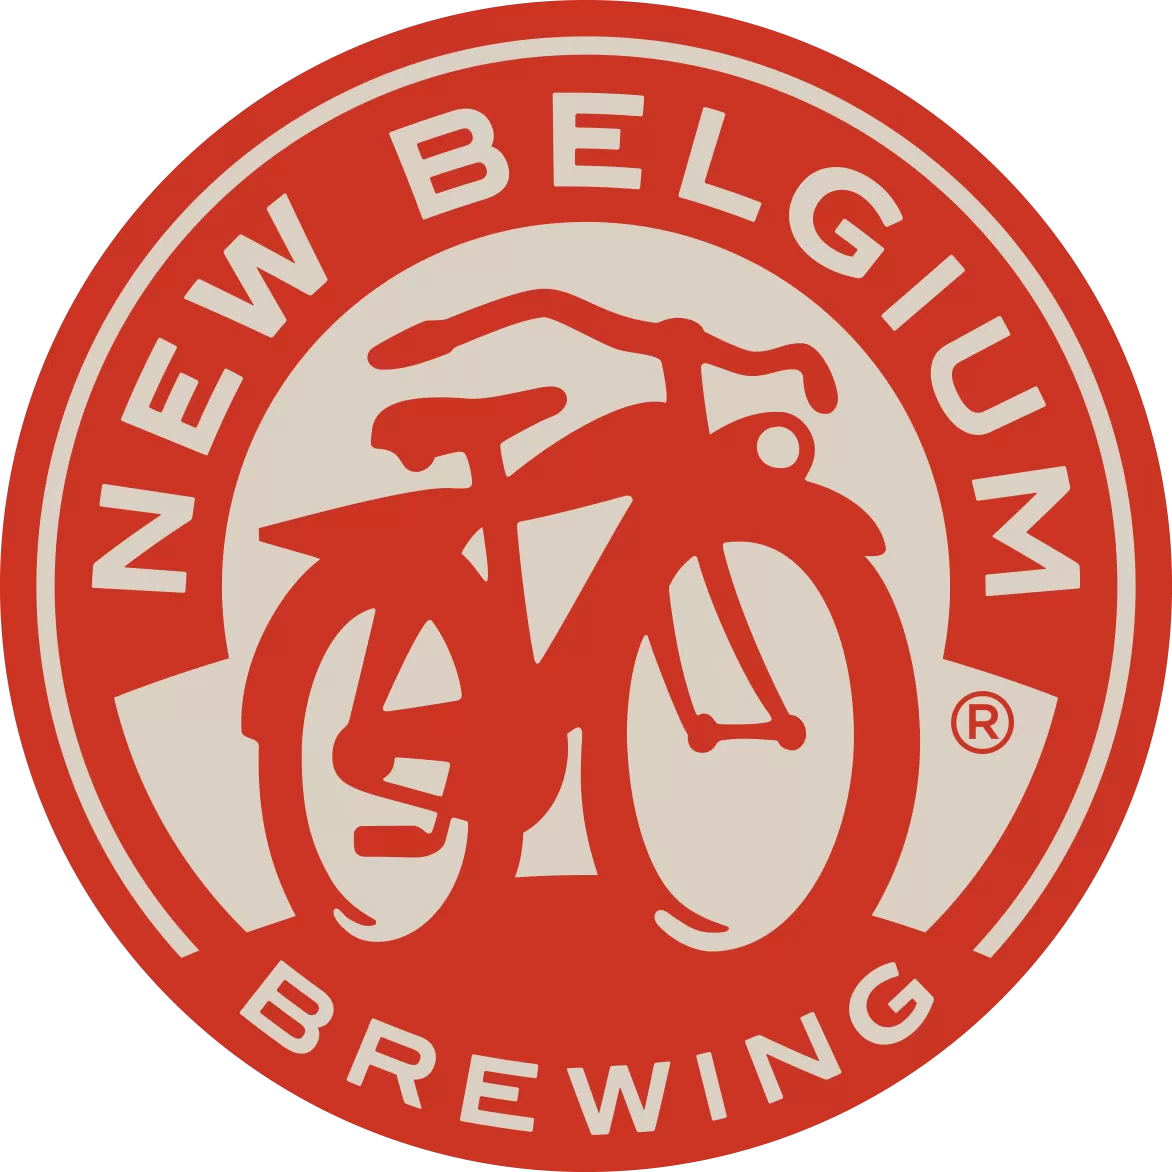 New Belgium Brewing logo